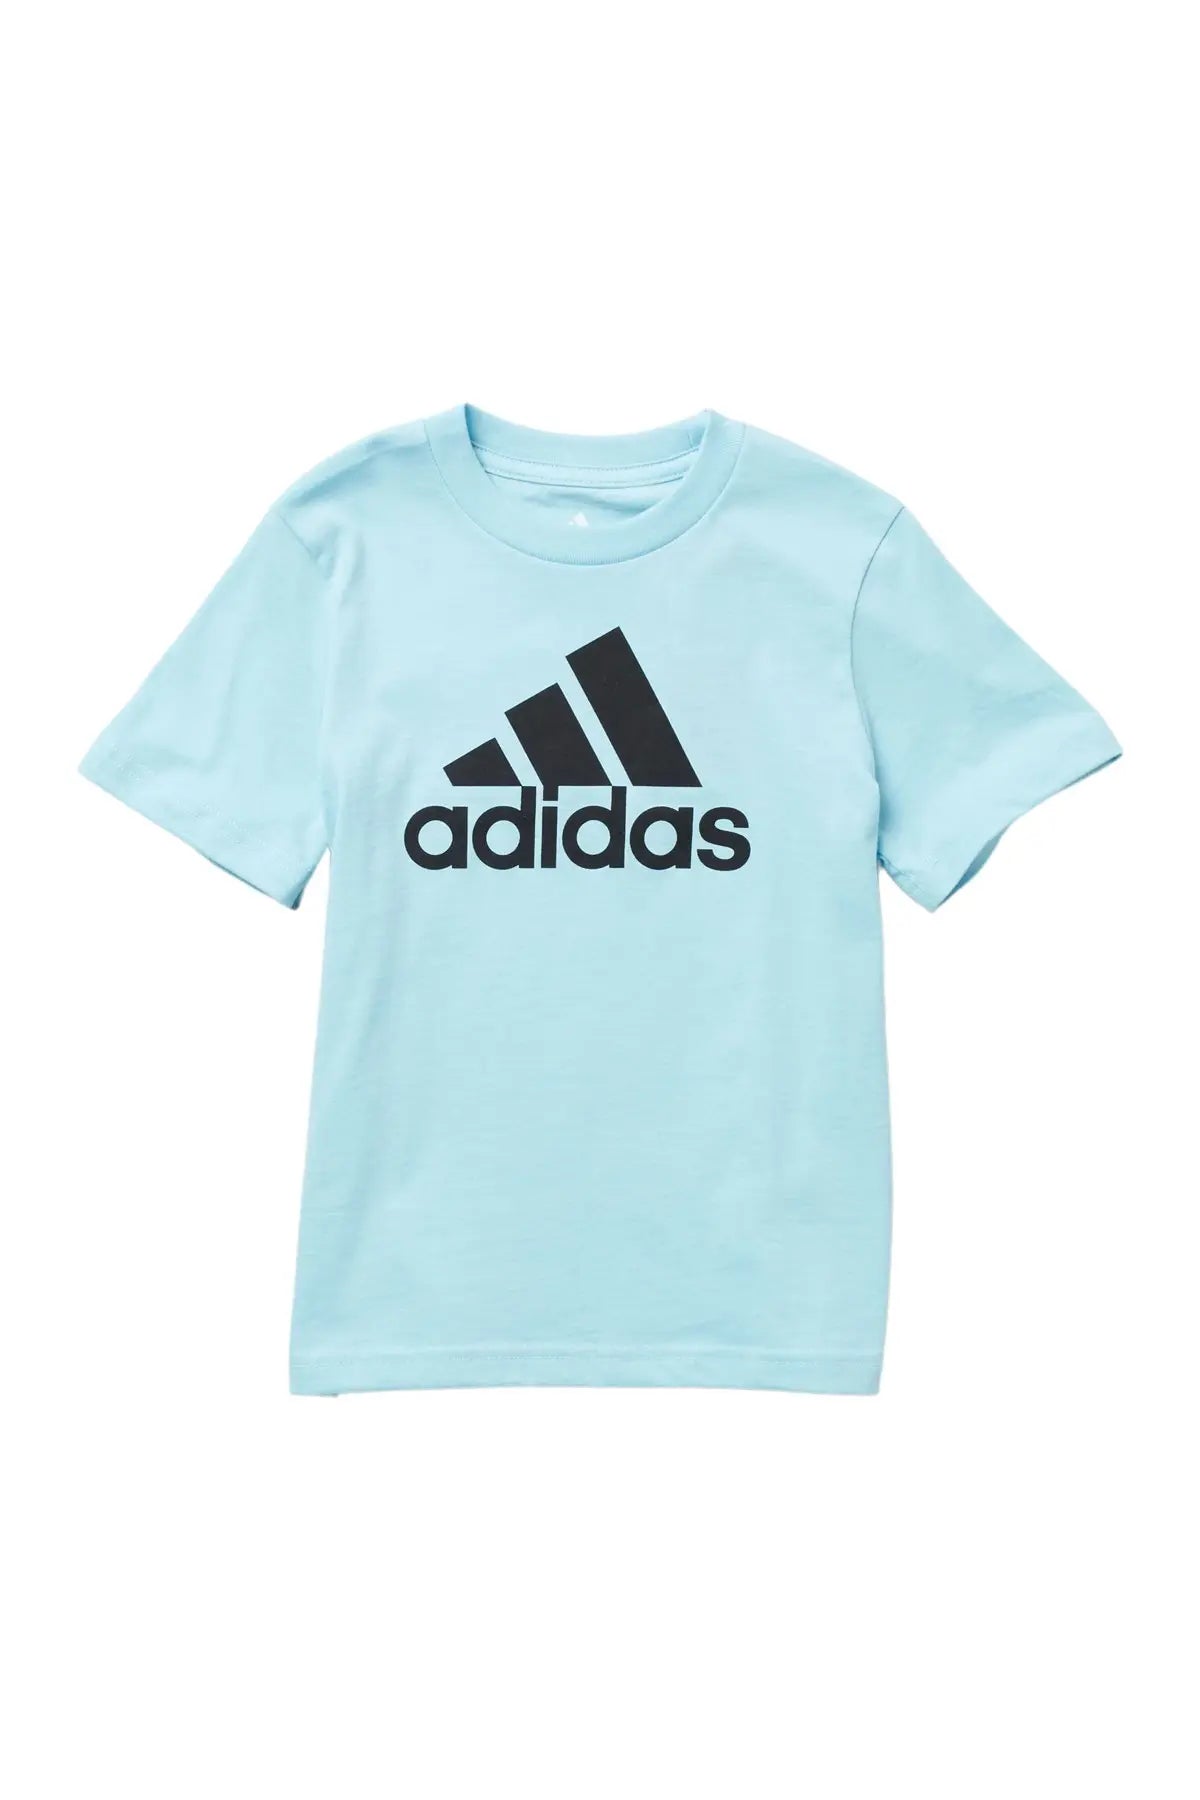 Adidas Boys T-Shirt